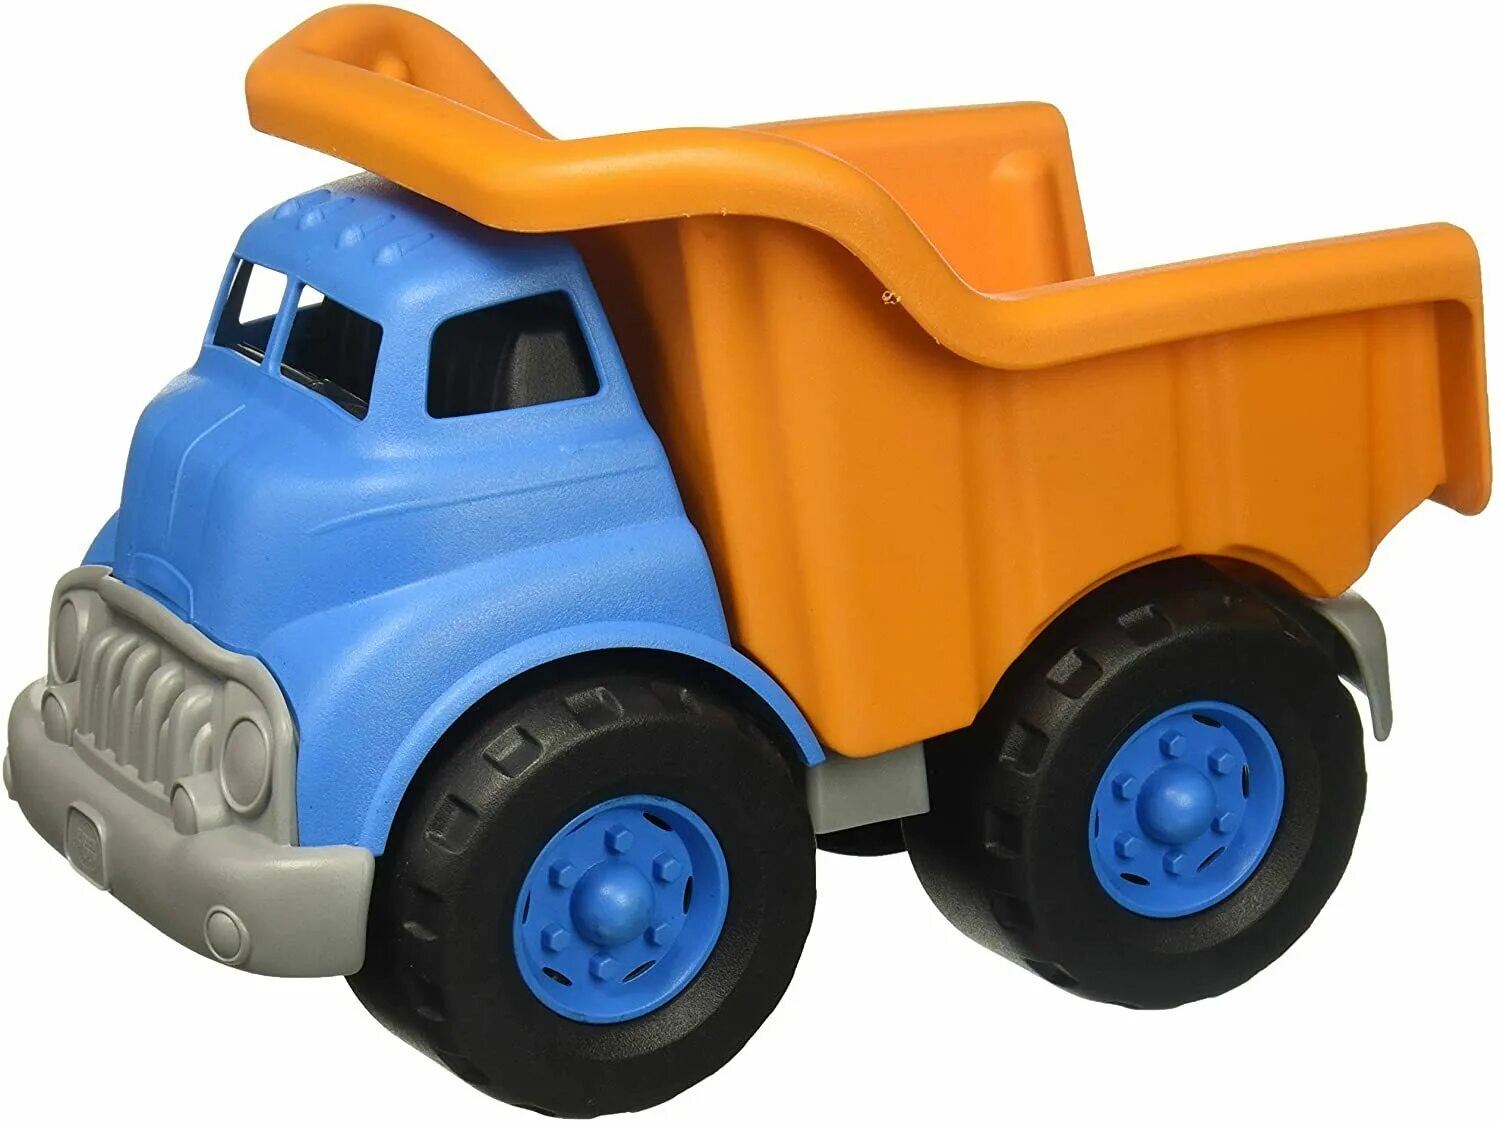 Грузовик KIDZTECH самосвал (87101) 28 см. Игрушка самосвал 26cm. Dumper Truck самосвал игрушка. Самосвал Mehri Toys. Купить игрушку грузовичок